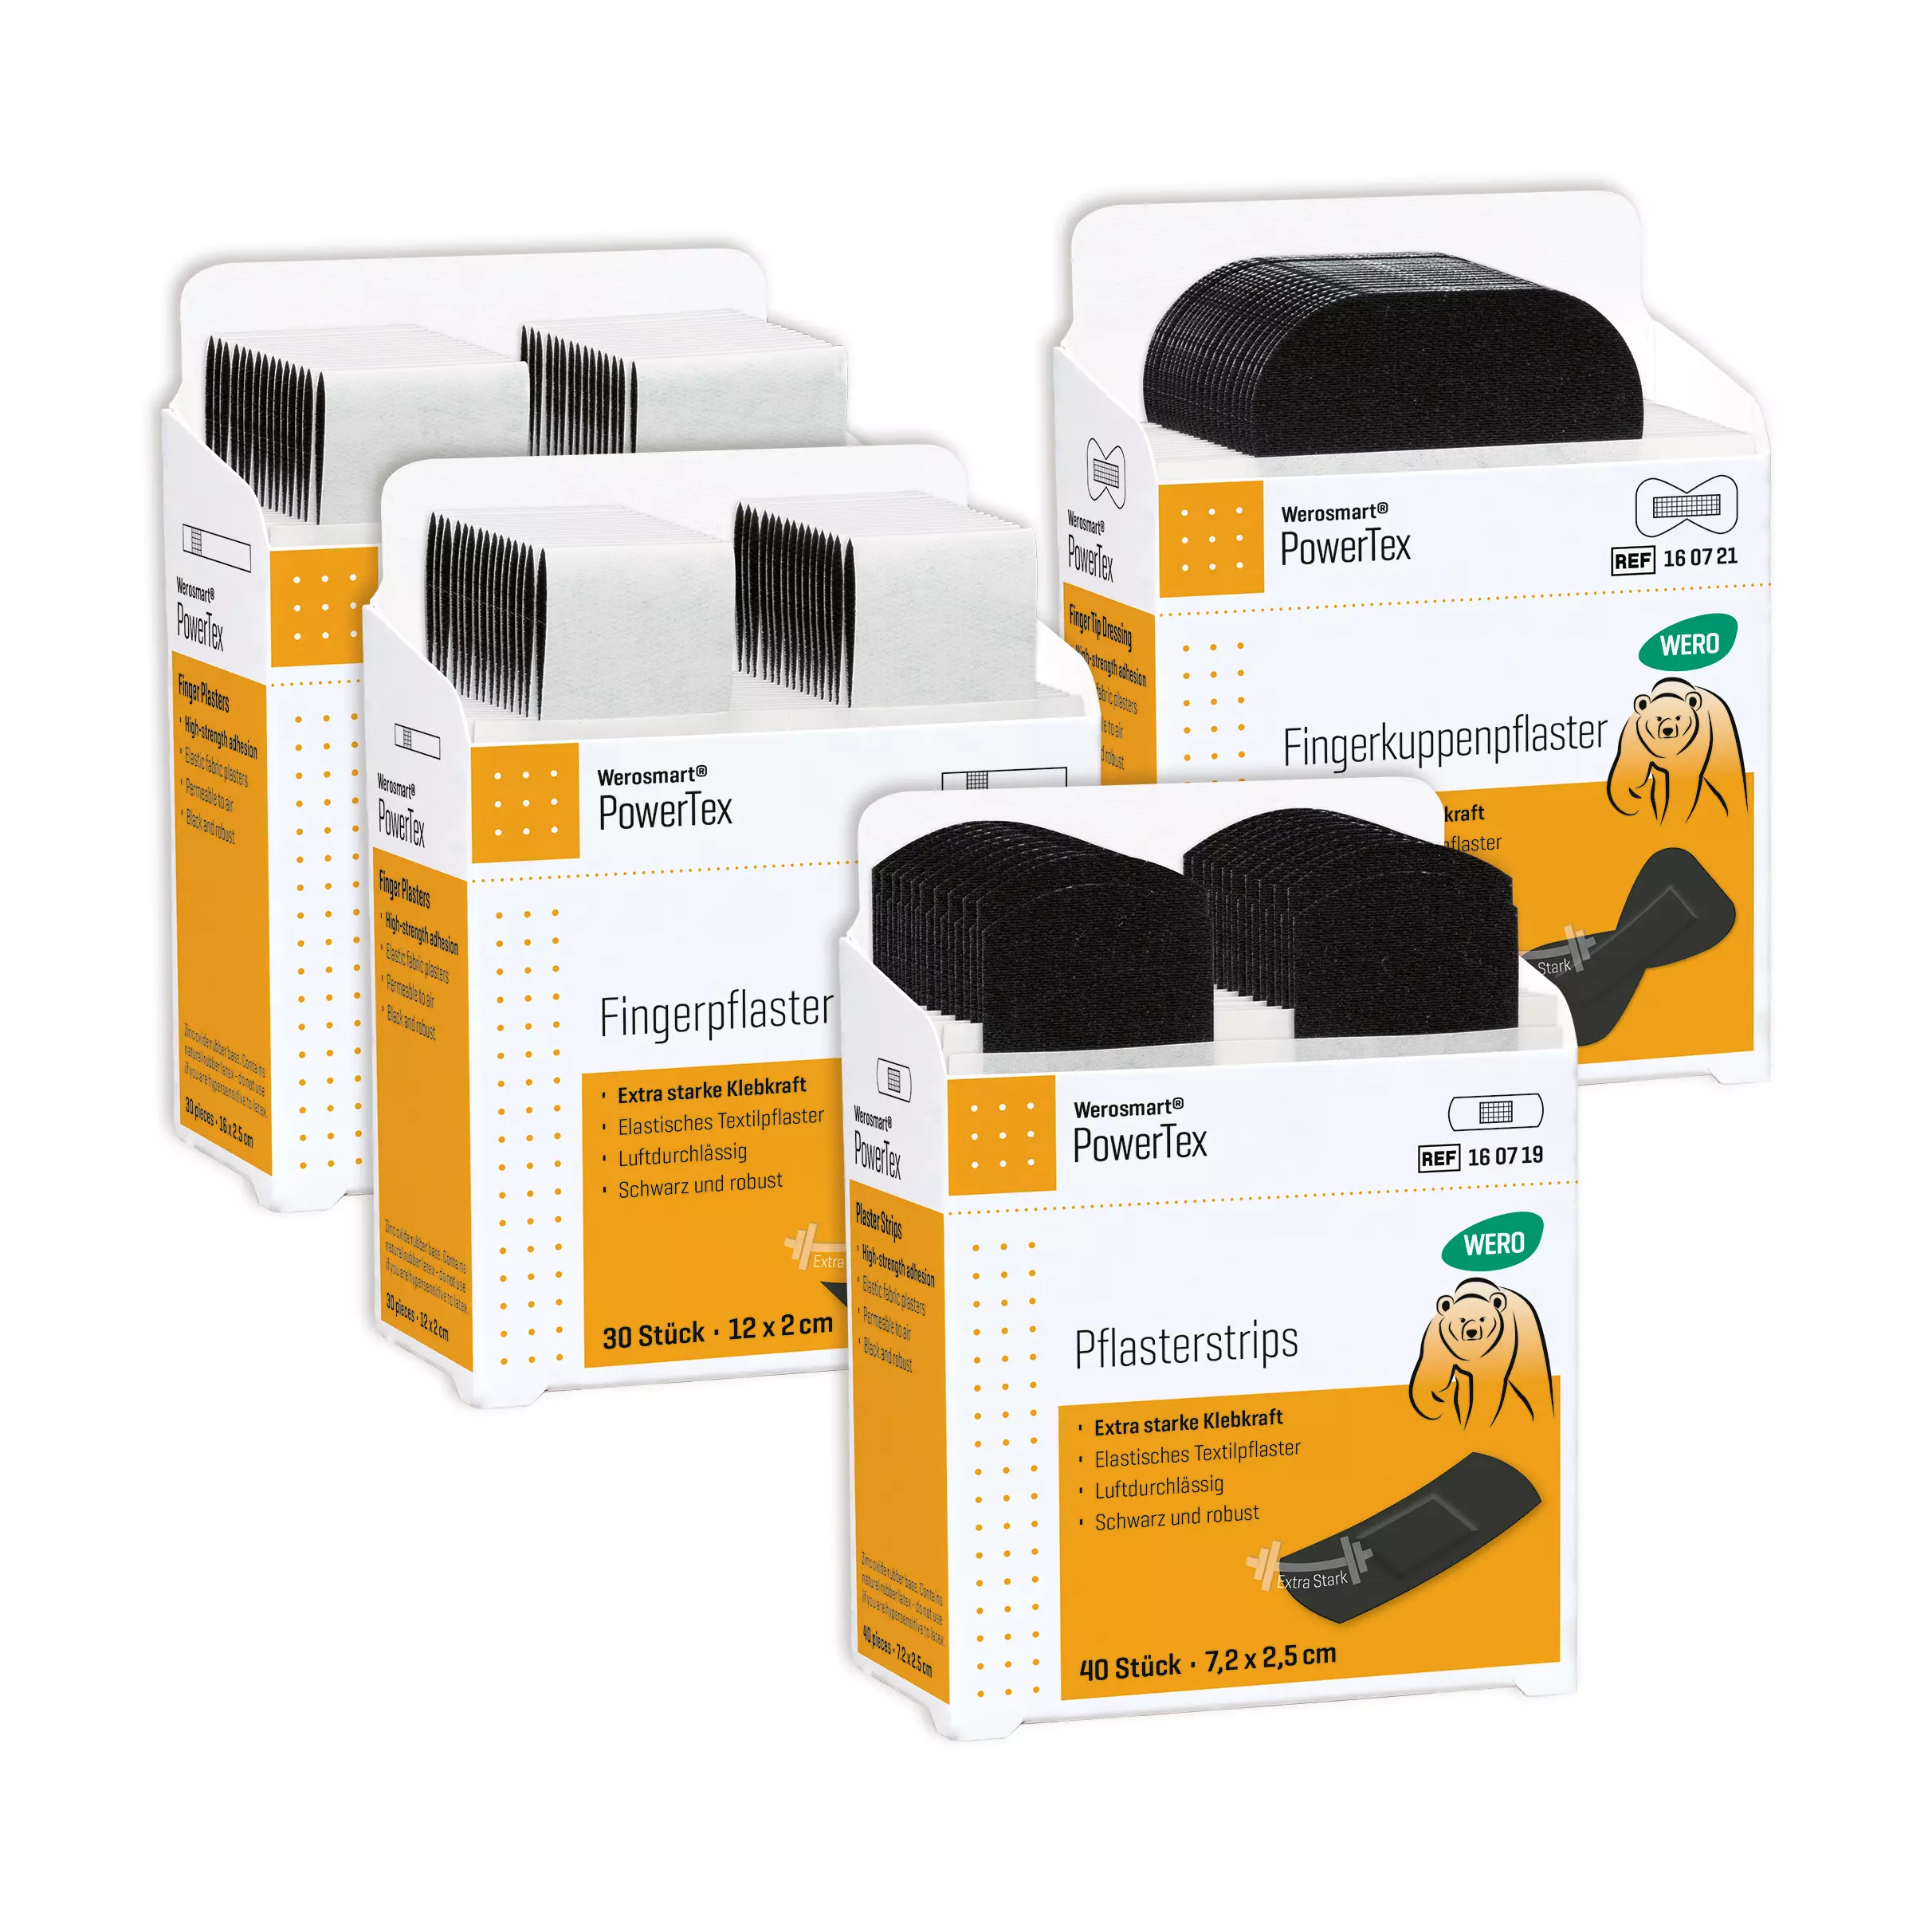 Werosmart® PowerTex plaster dispenser inserts fingertip plasters - 8 cm, 5 inserts